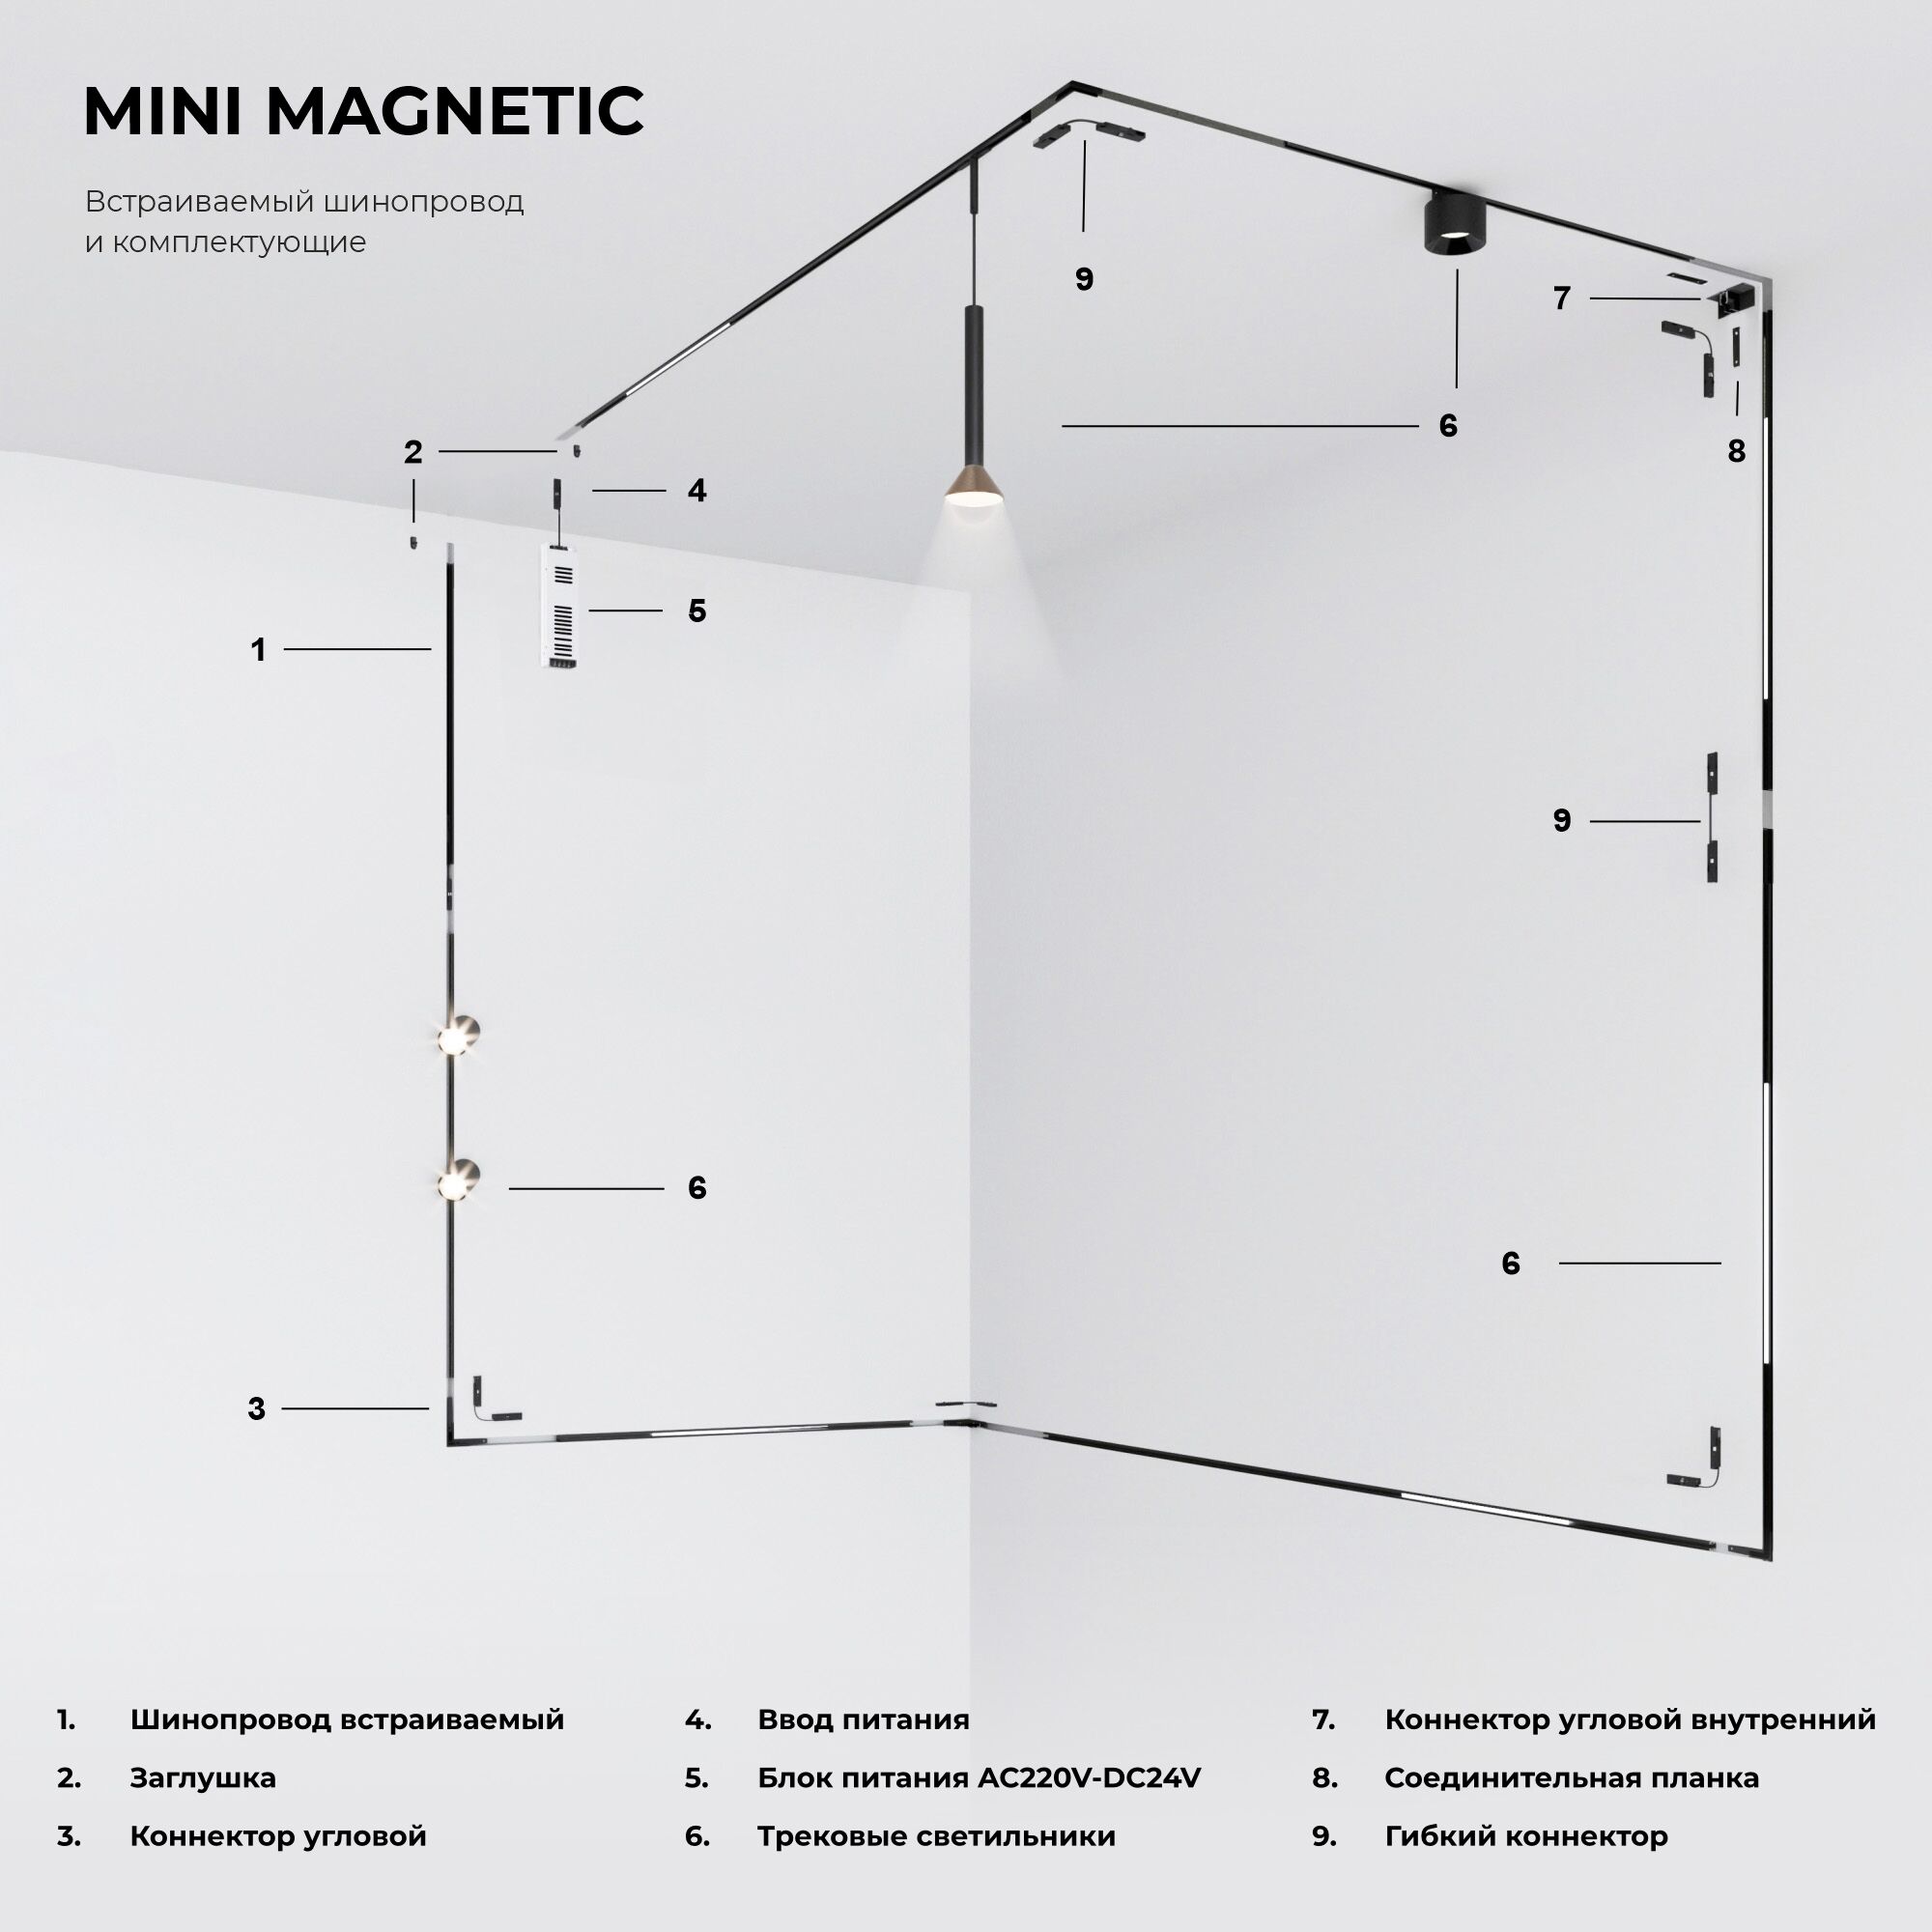 Mini Magnetic Гибкий коннектор черный 85173/00